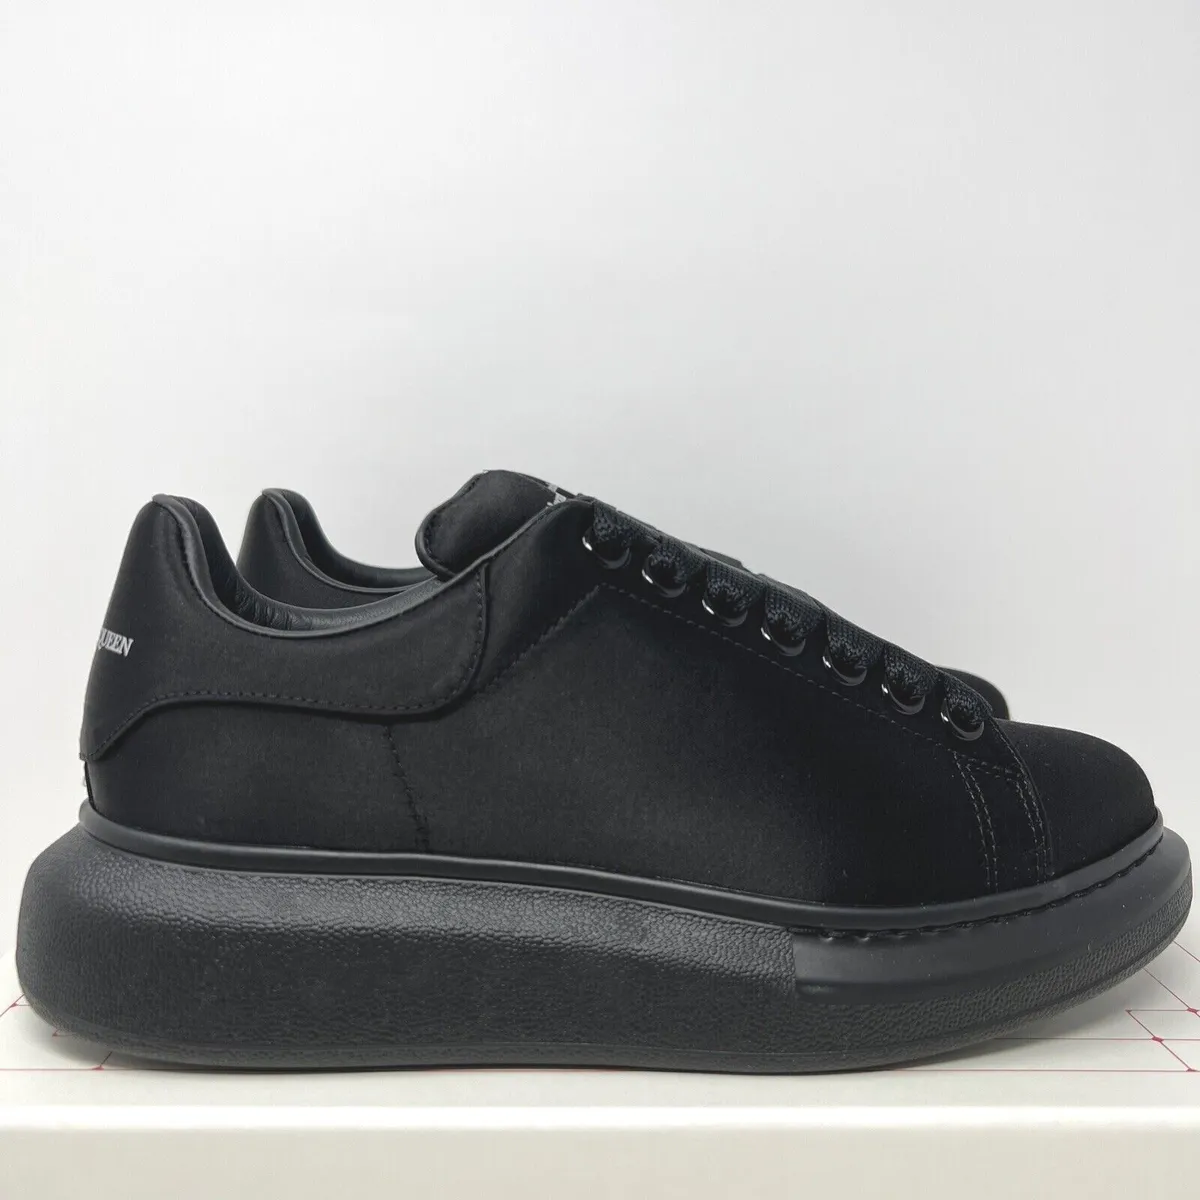 Alexander McQueen, Shoes, Alexander Mcqueen All White Size 39